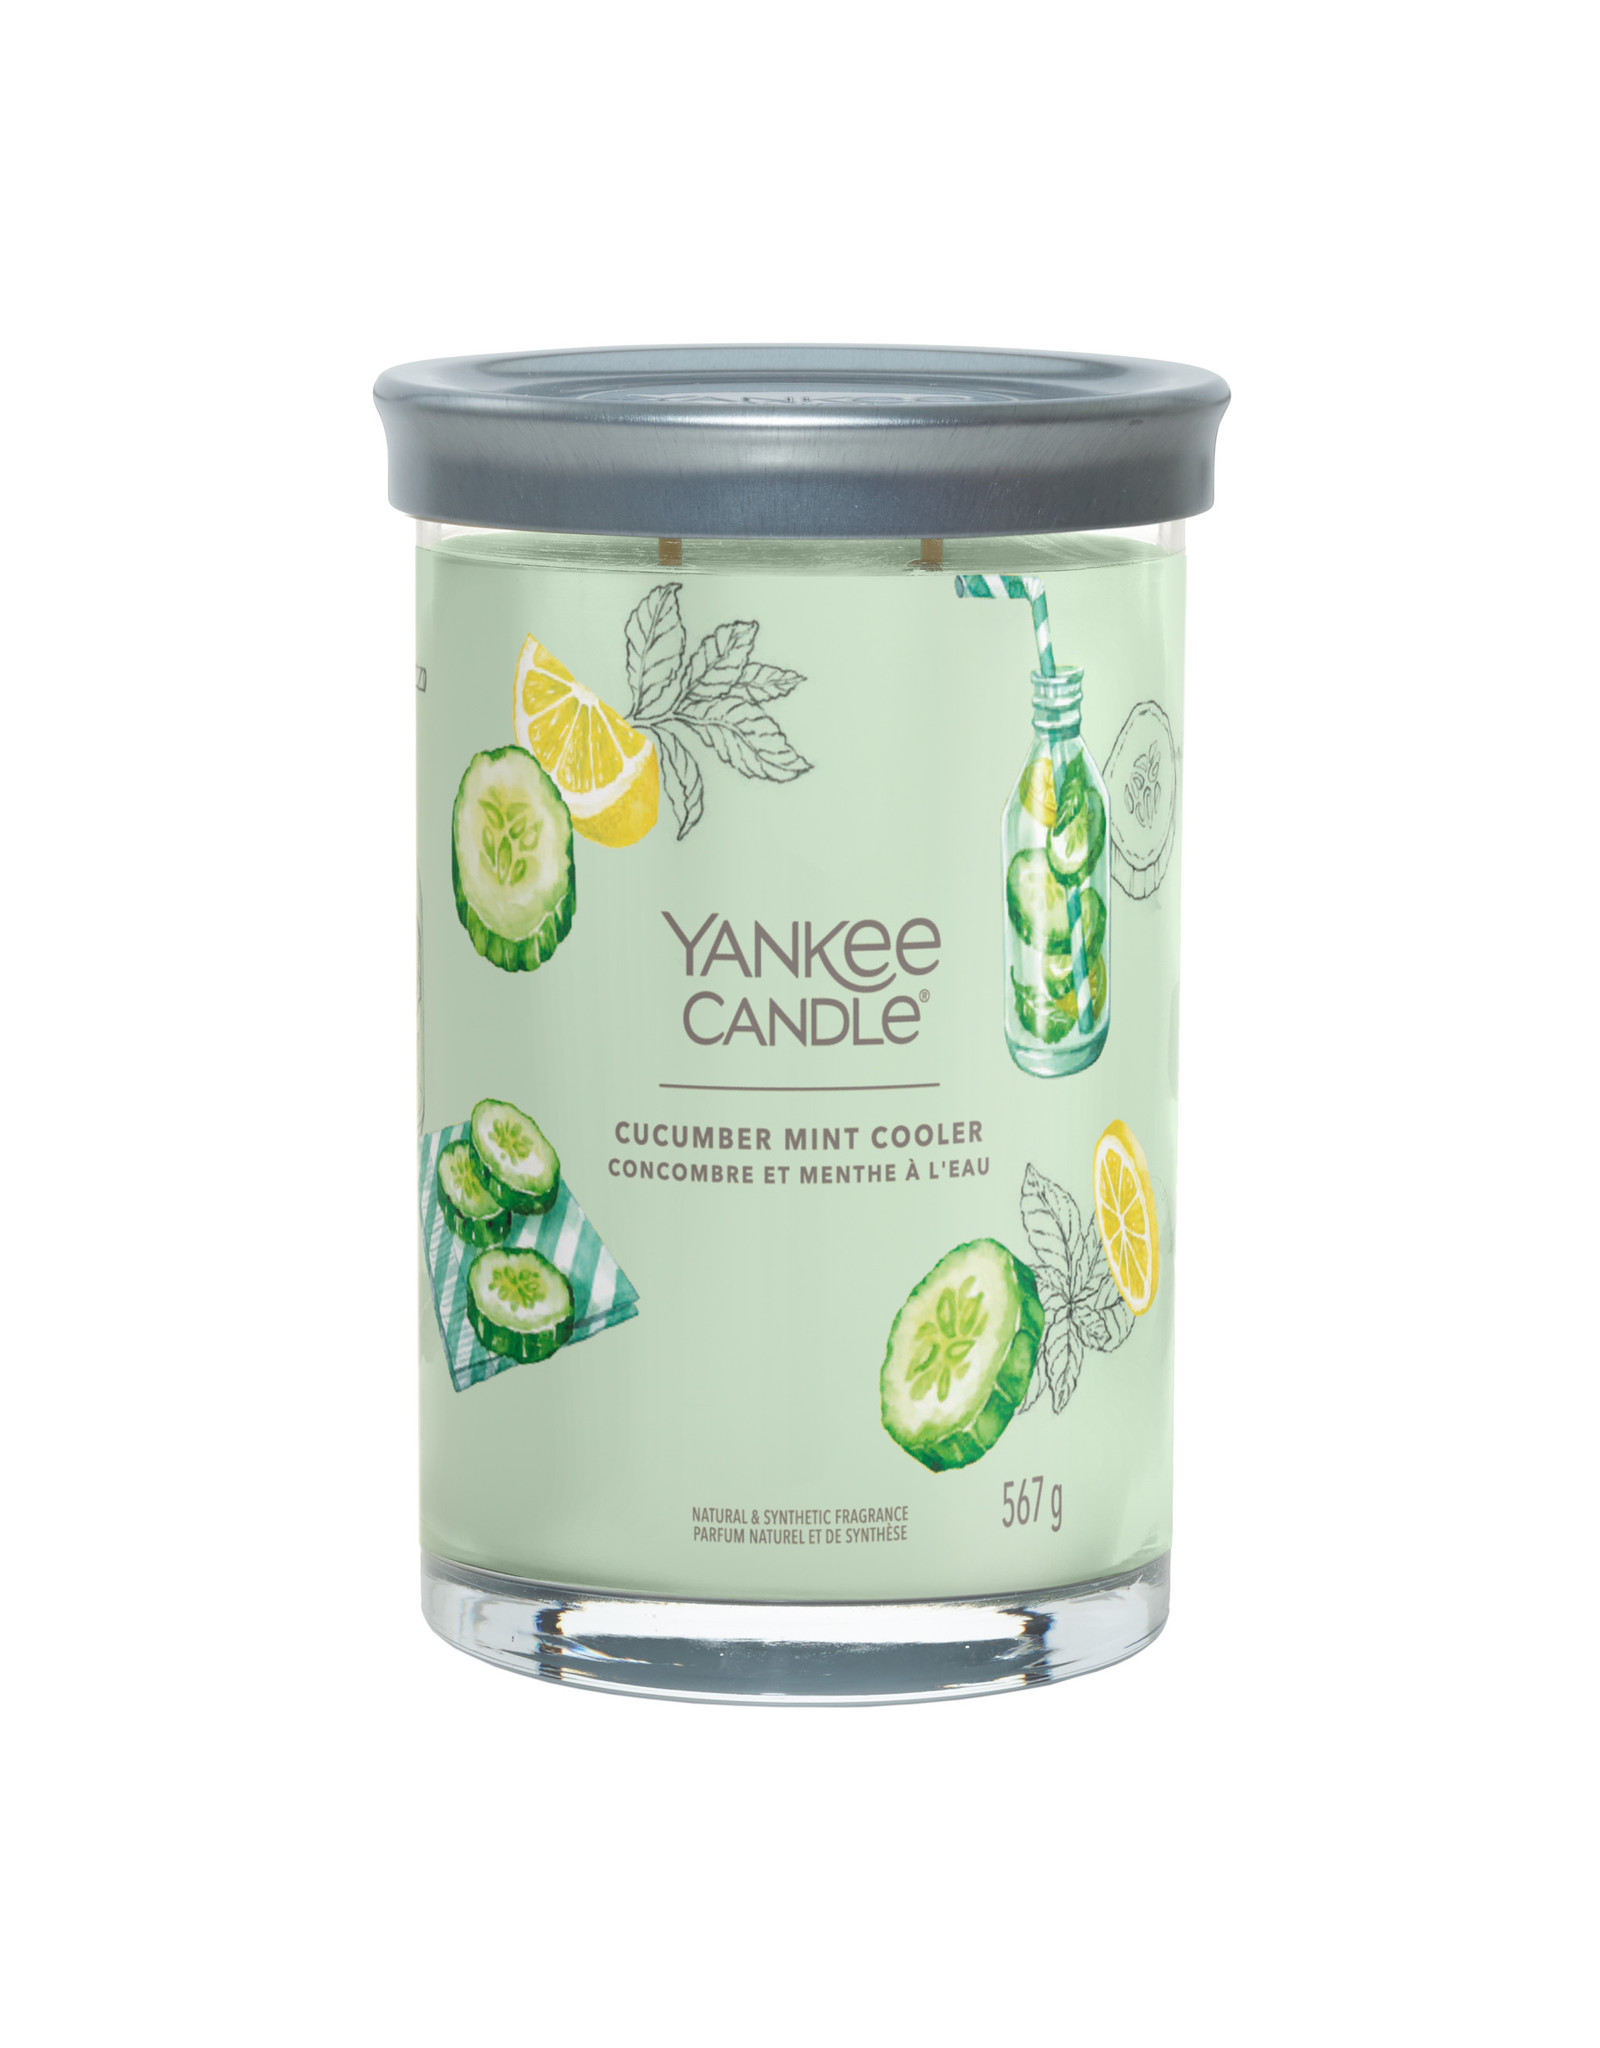 Yankee Candle Cucumber Mint Cooler - Signature Large Tumbler